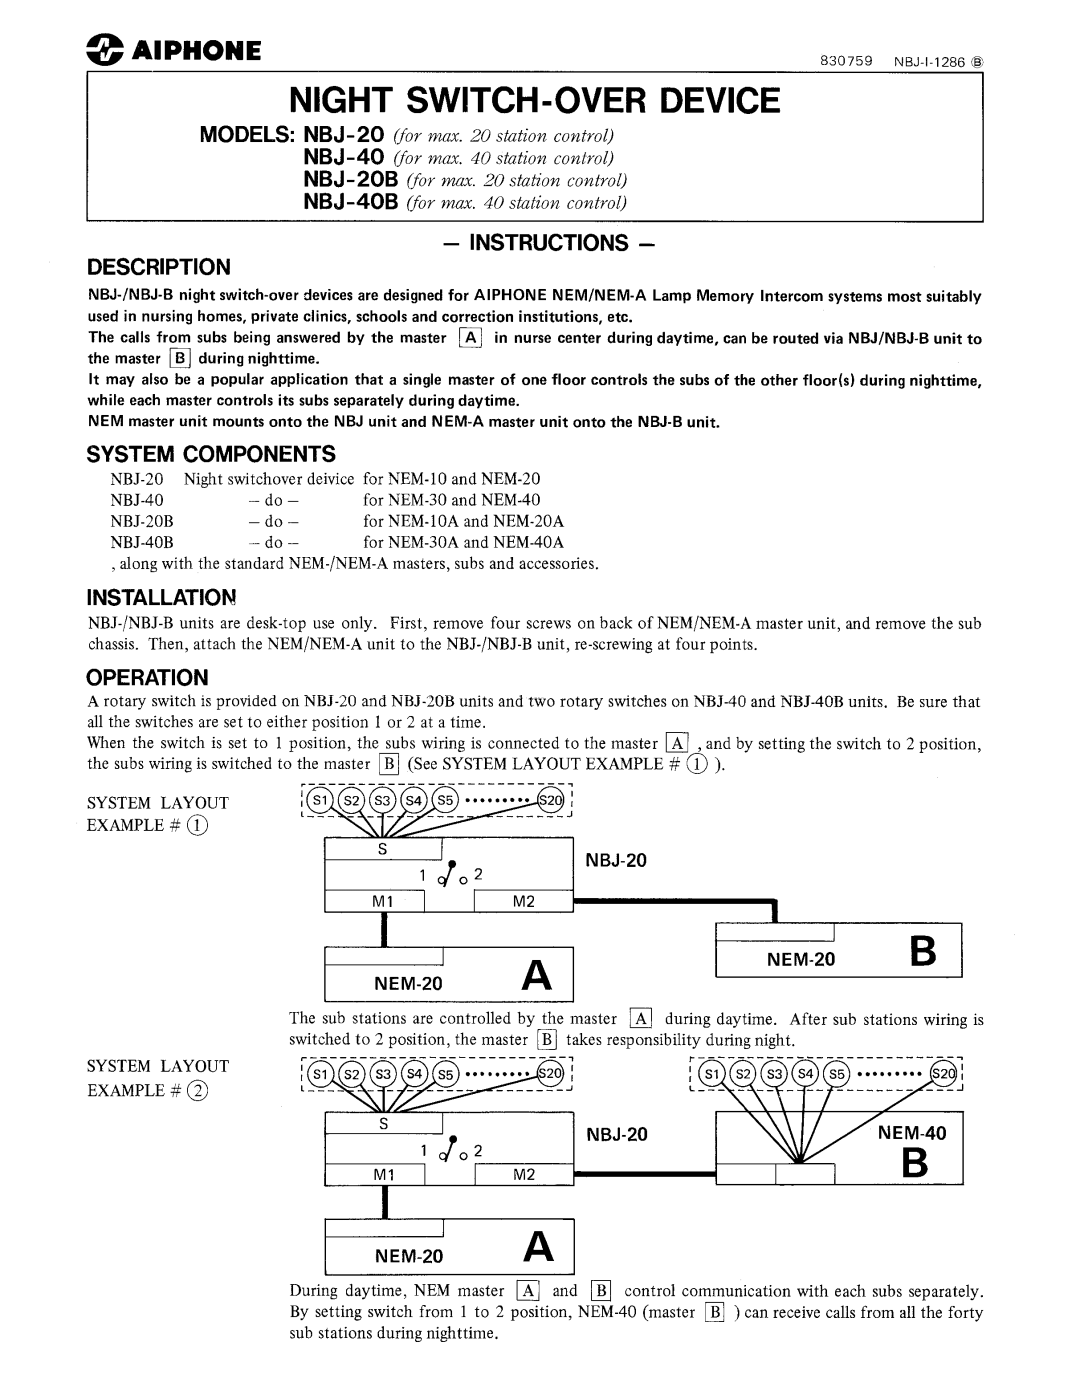 Aiphone NBJ-40B, NBJ-20B manual 